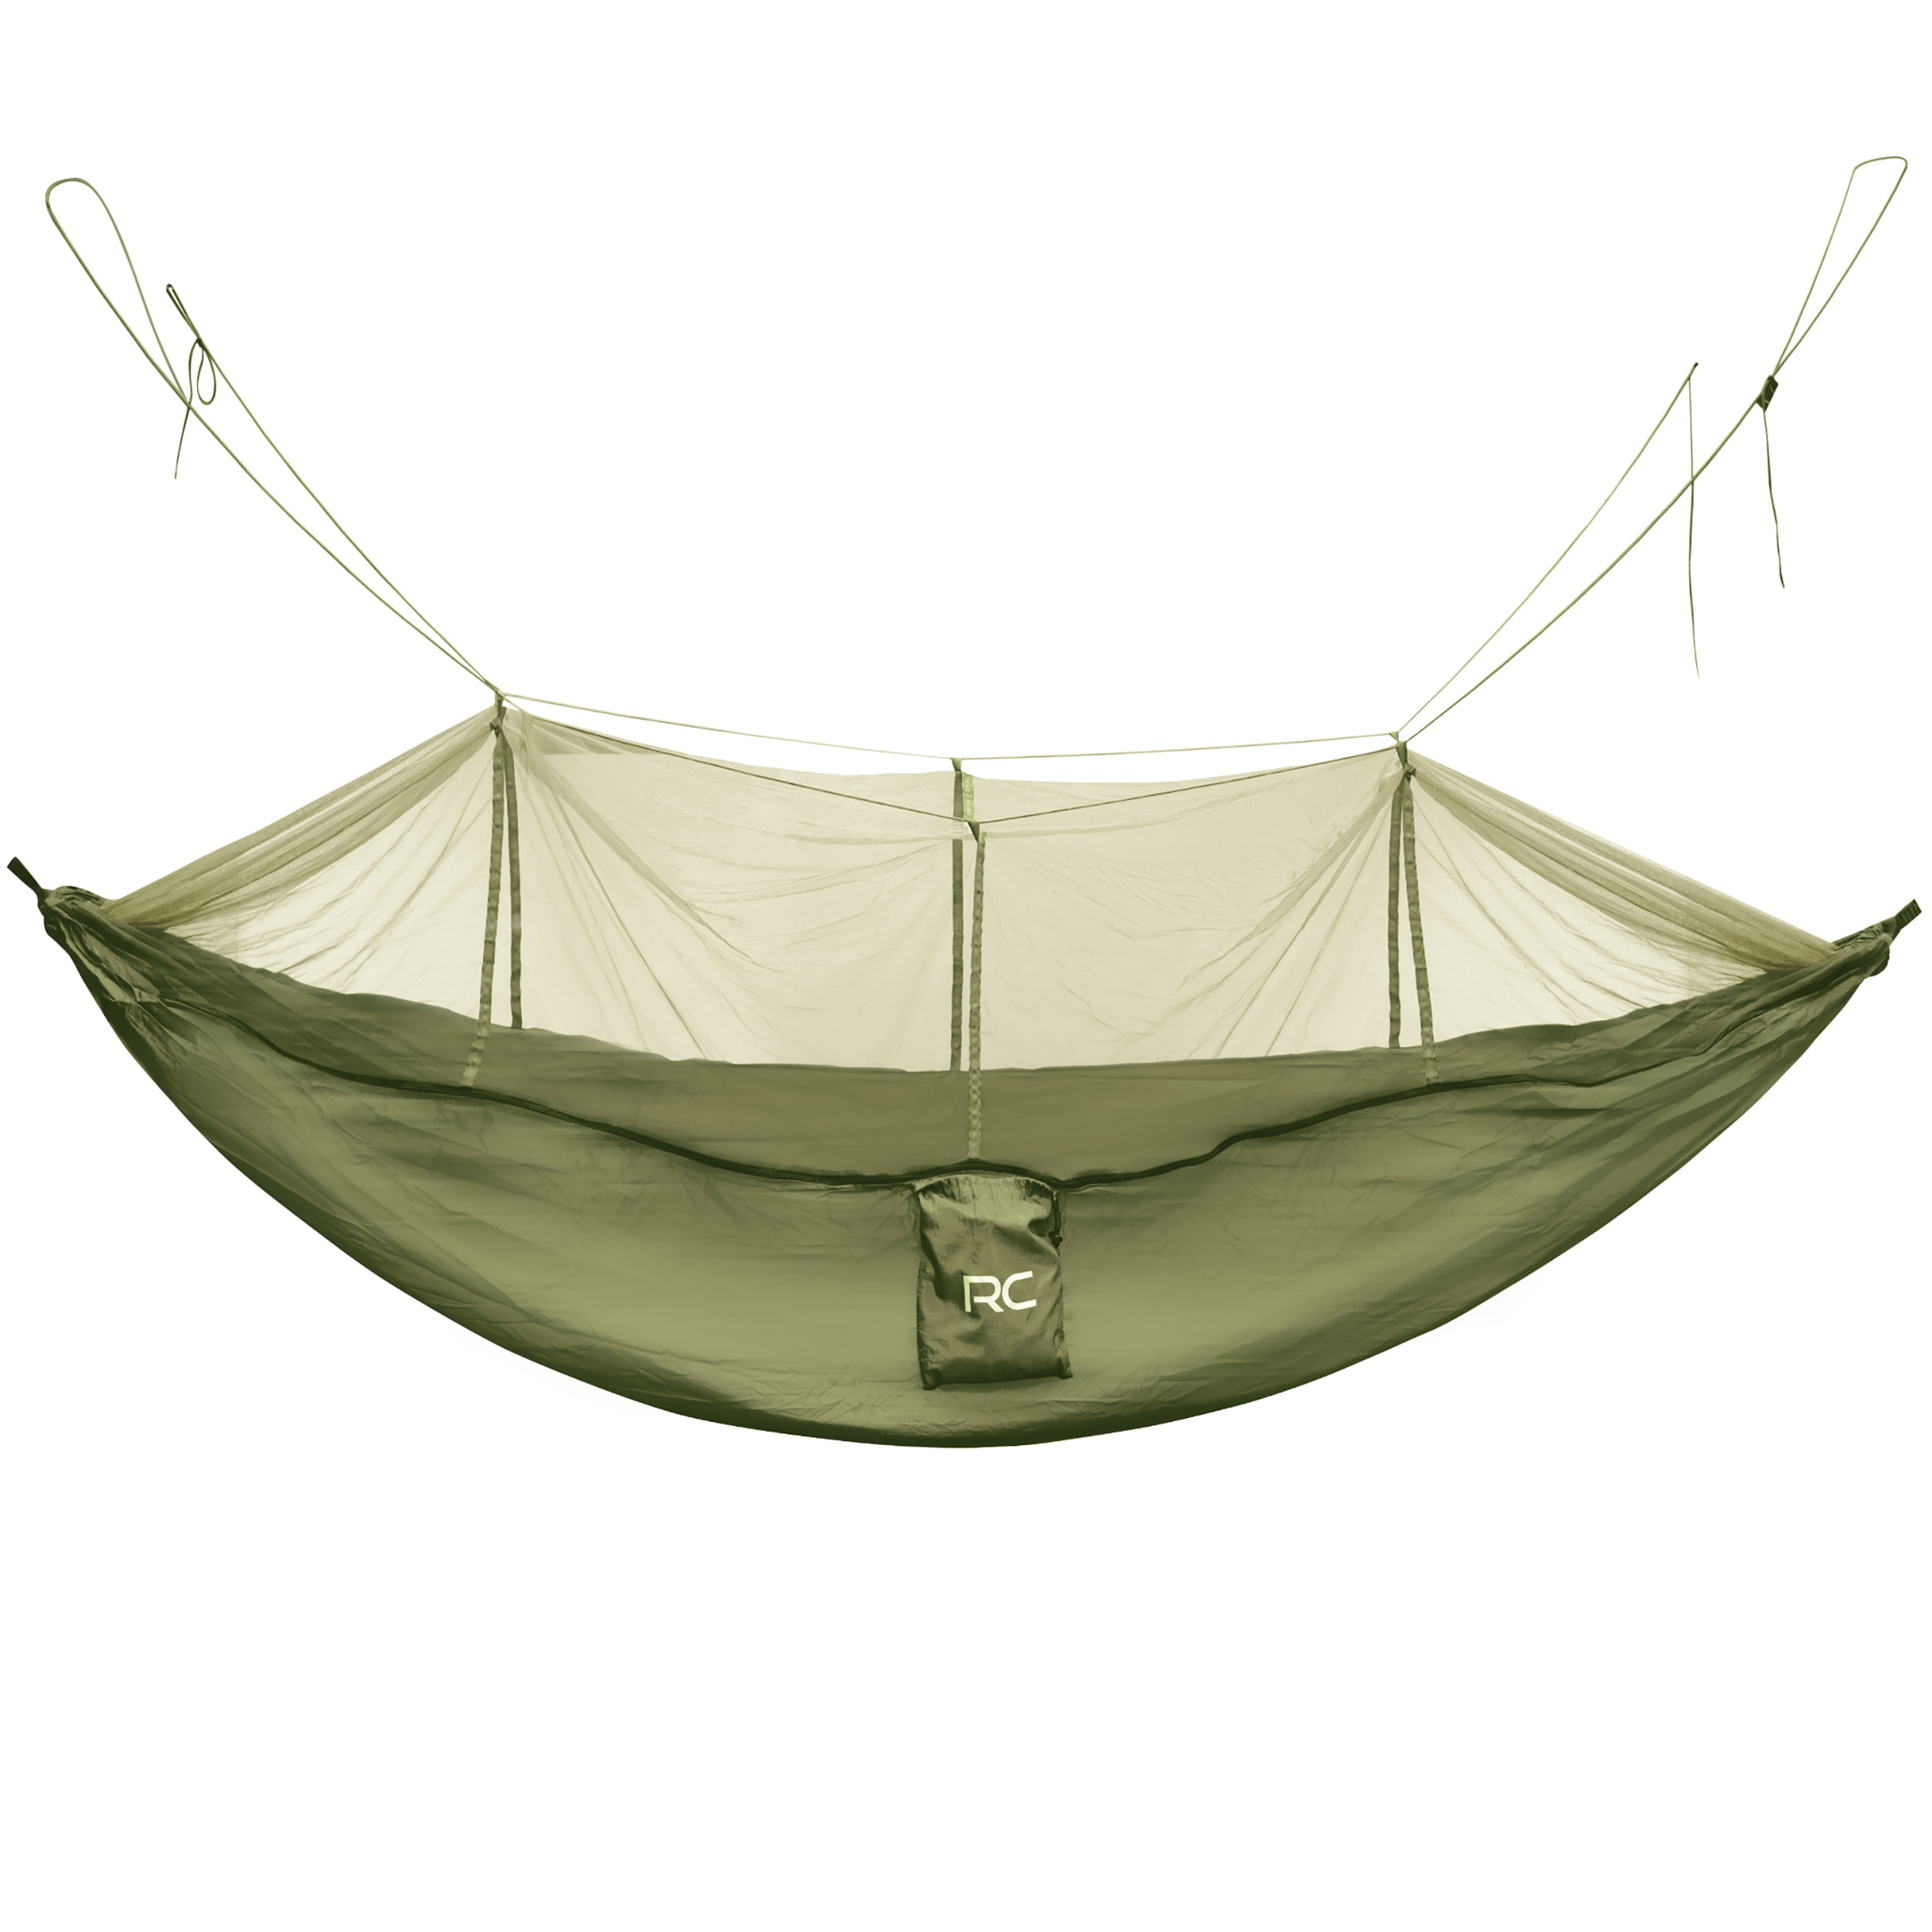 Lightweight Sleeping Bags for Adults Warm Weather Camp Tree Hammock RC Sleeping Bag Travel Hammock with Mosquito Net